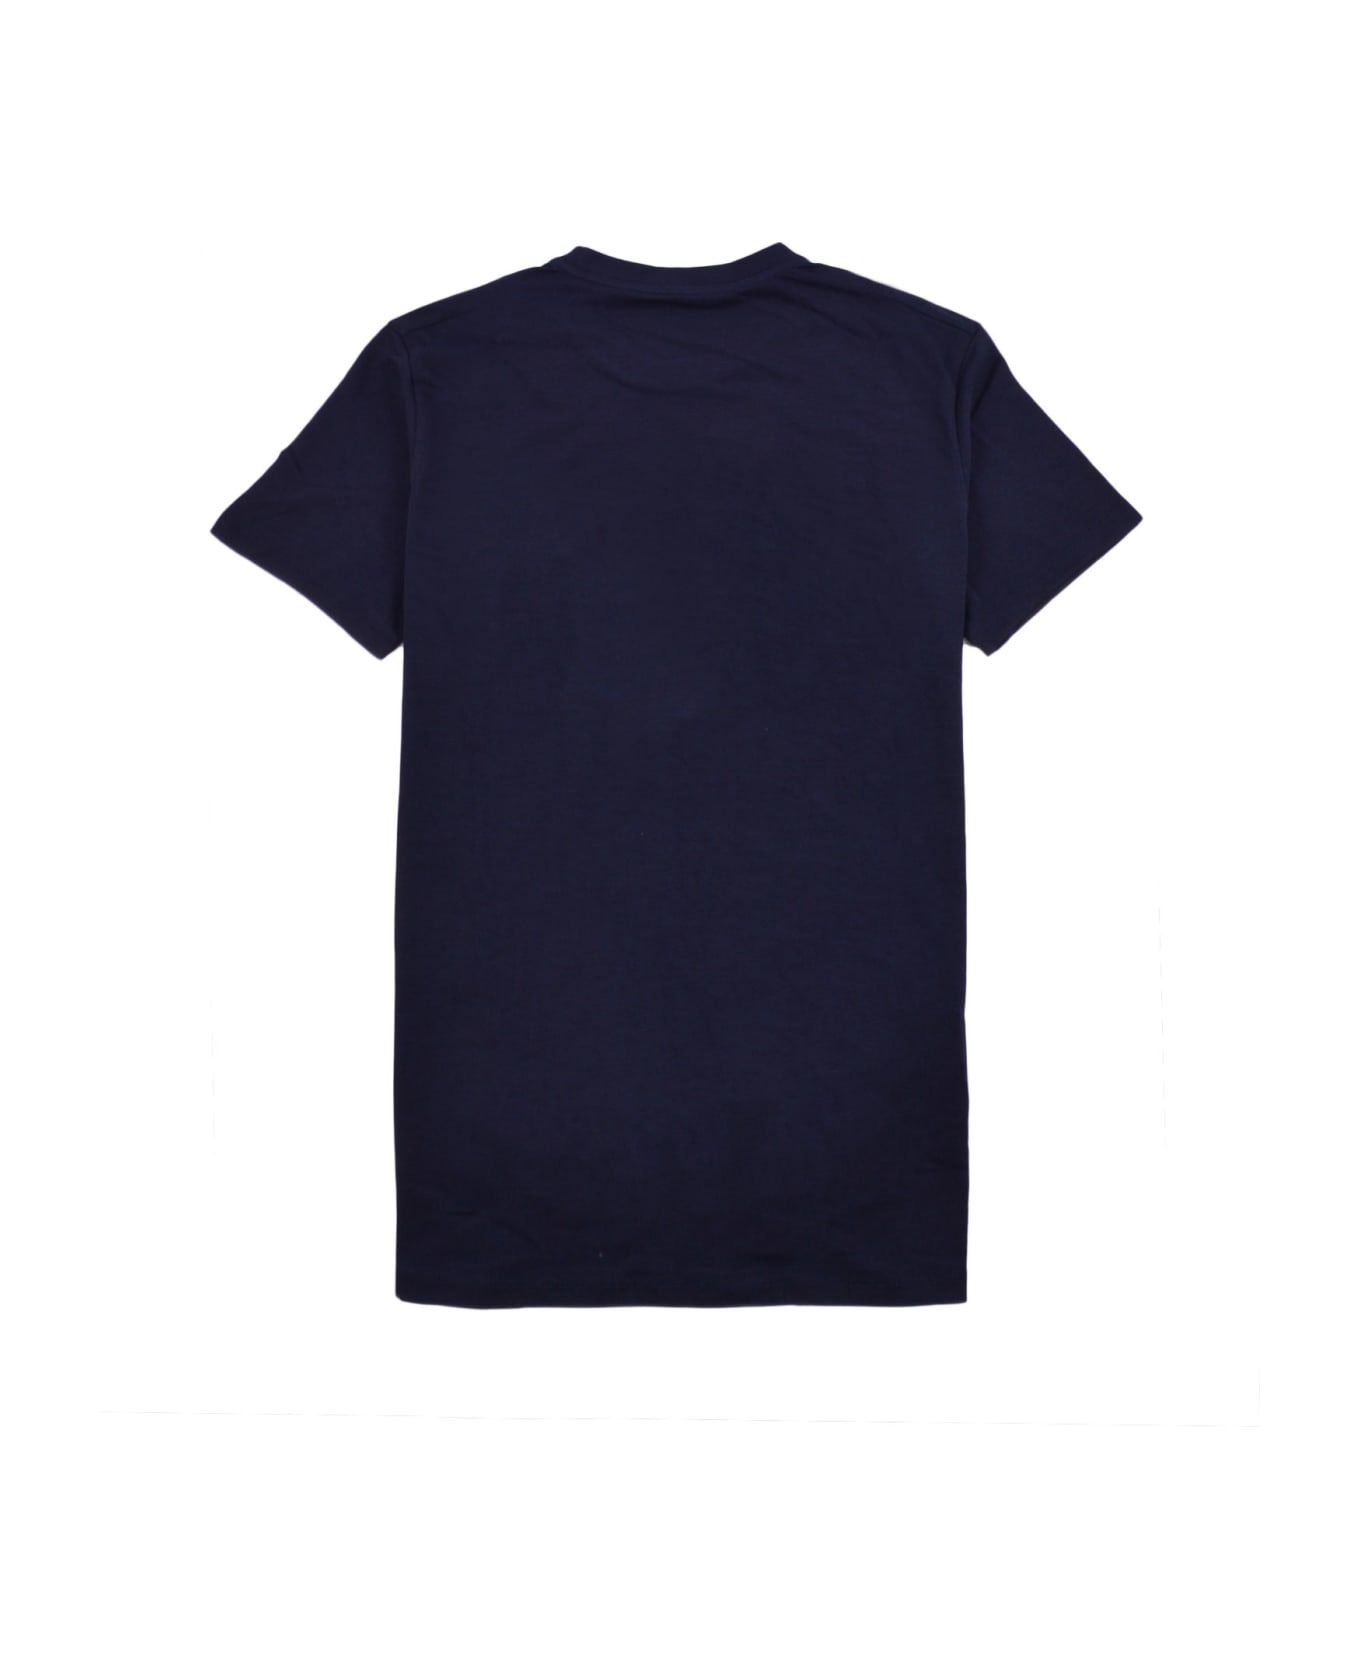 RRD - Roberto Ricci Design T-shirt - Blue Black